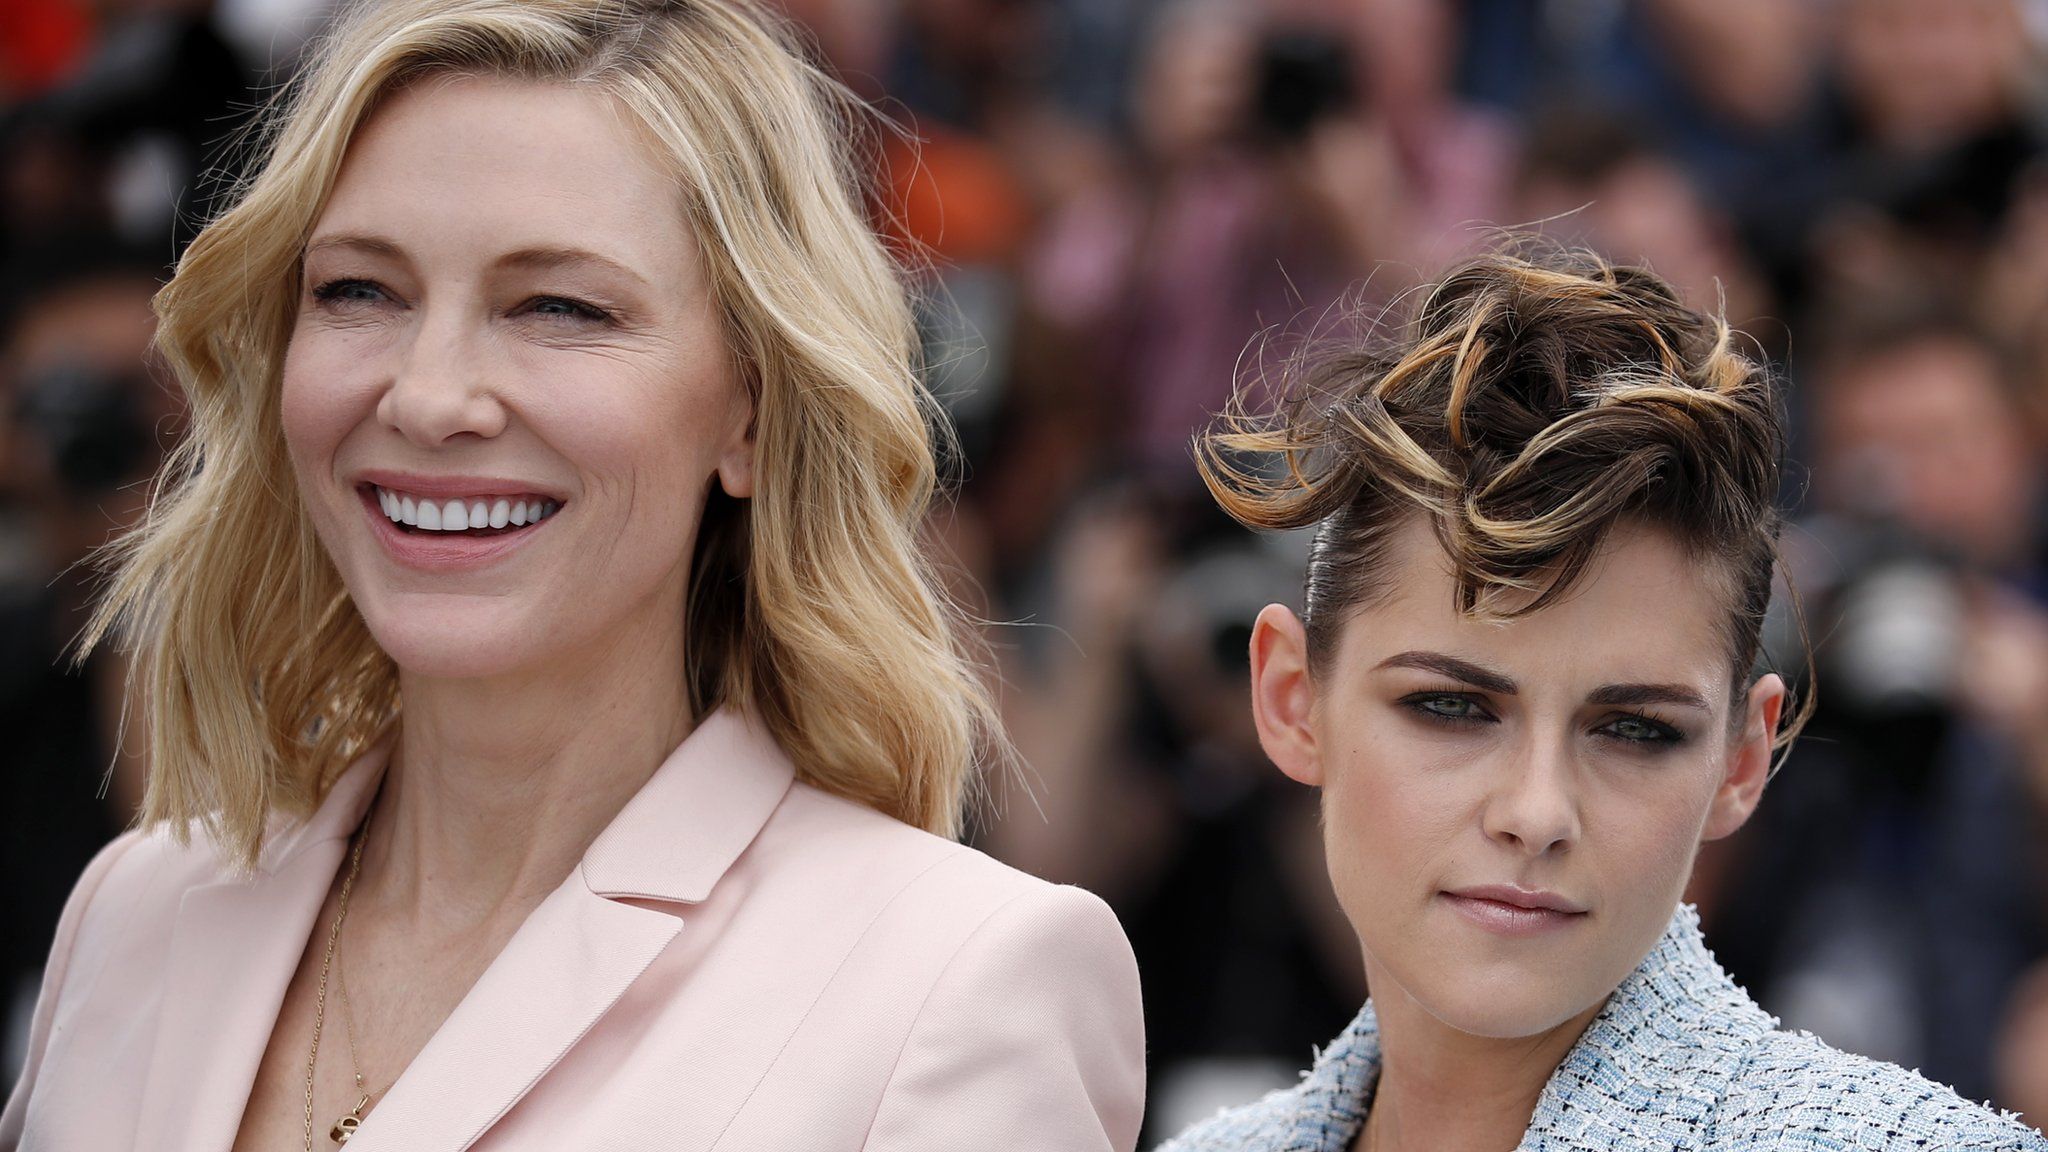 Cate Blanchett and fellow Cannes juror Kristen Stewart